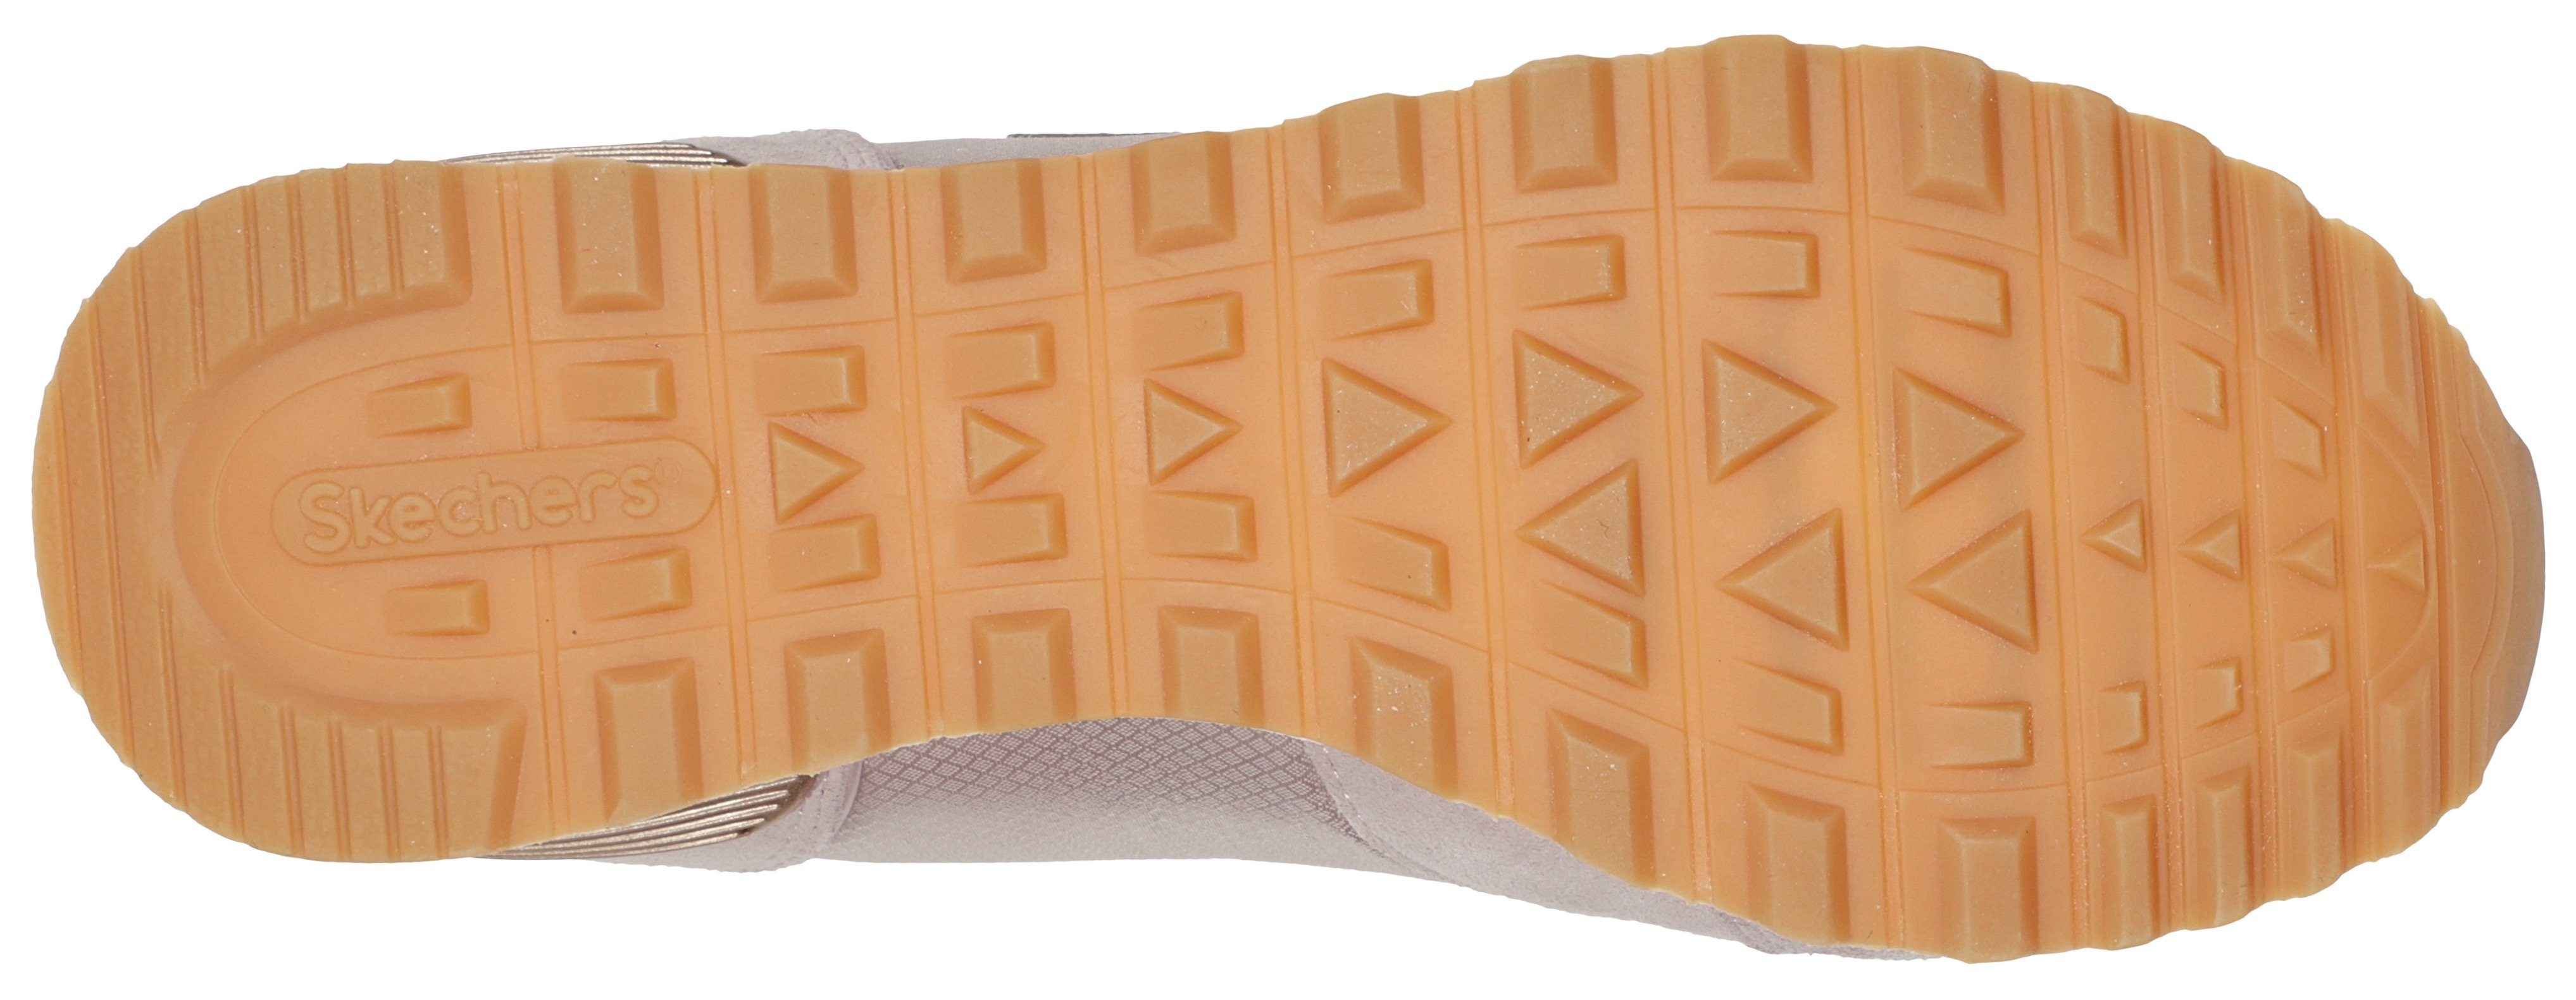 Skechers GURL - OG rose GOLDN komfortabler Ausstattung Sneaker Foam Memory 85 mit Air-Cooled